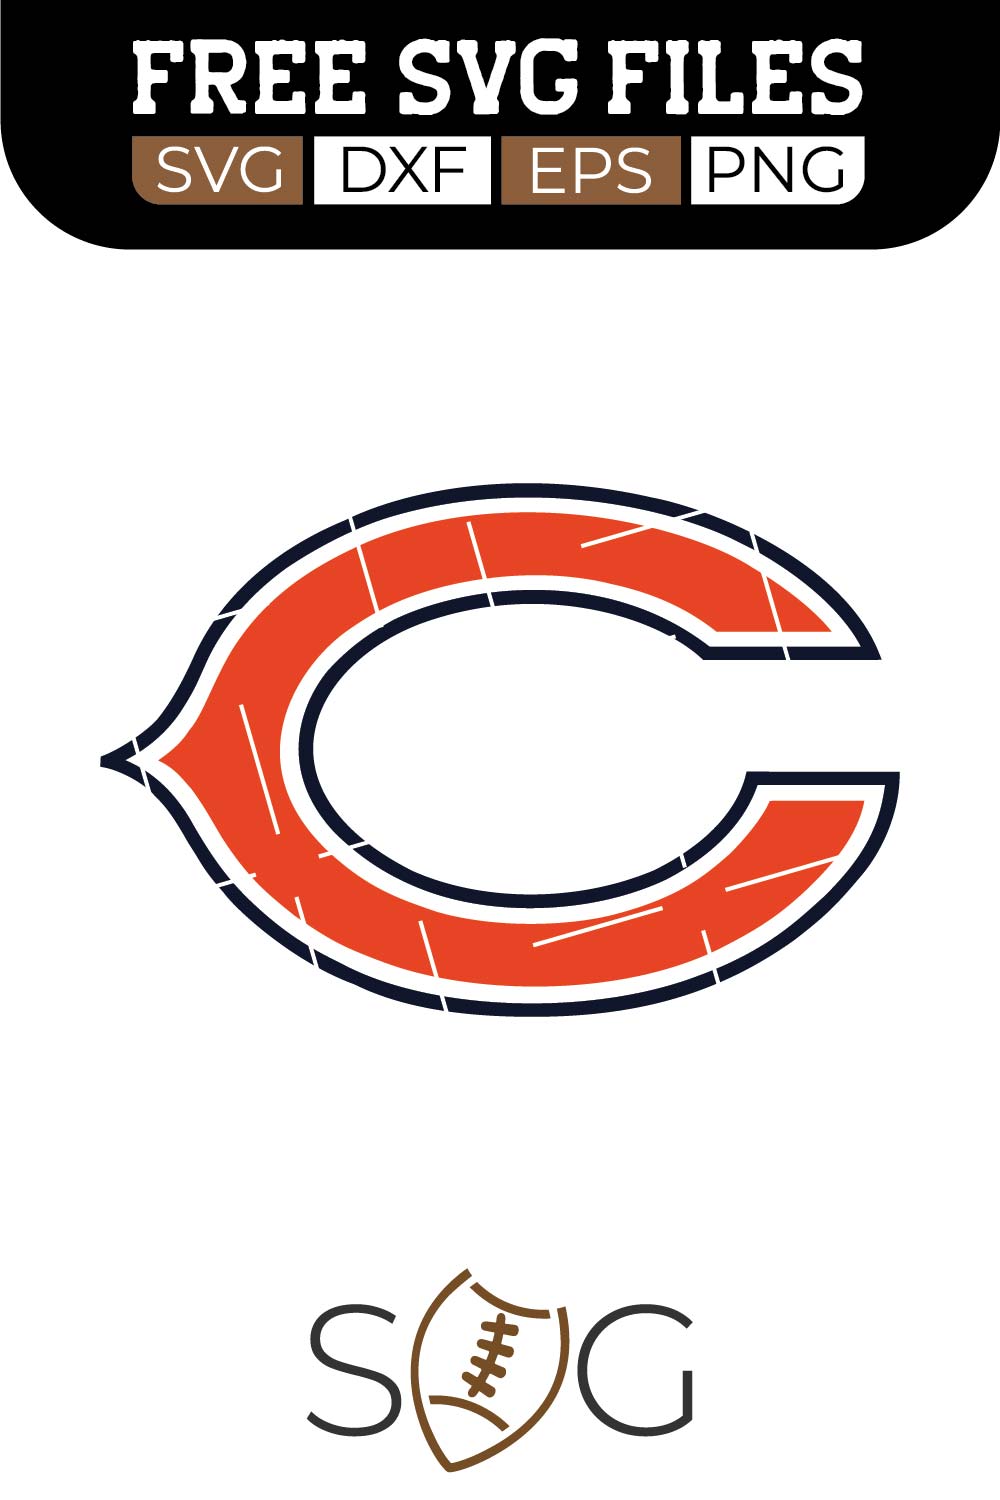 Chicago Bears SVG Cut Files Free Download | FootballSVG.com